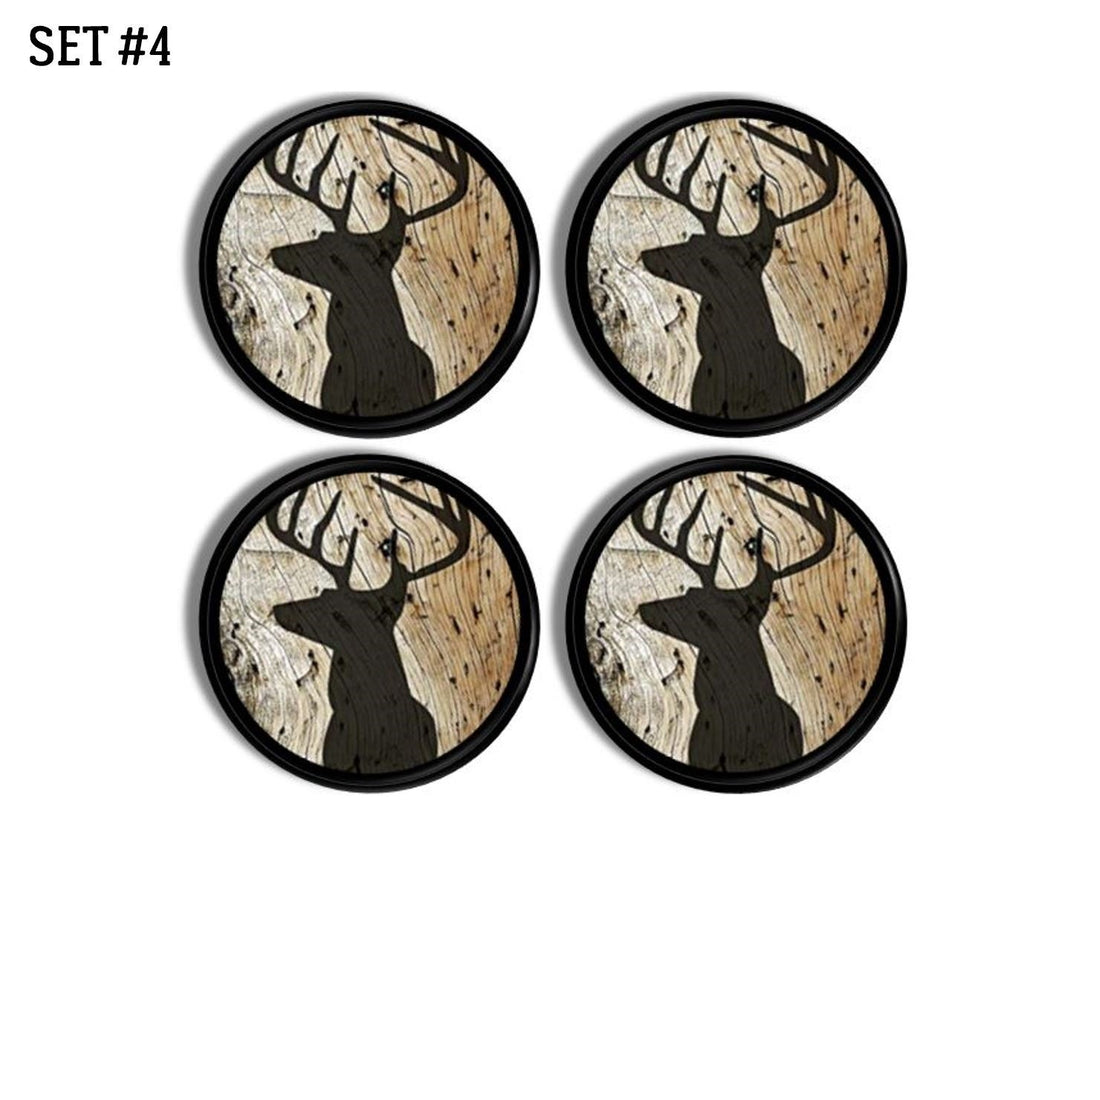 4 Piece set of deer stag themed mens dresser drawer pulls. Black and brown cabinet door knobs for hunting cabin mancave bar decor.